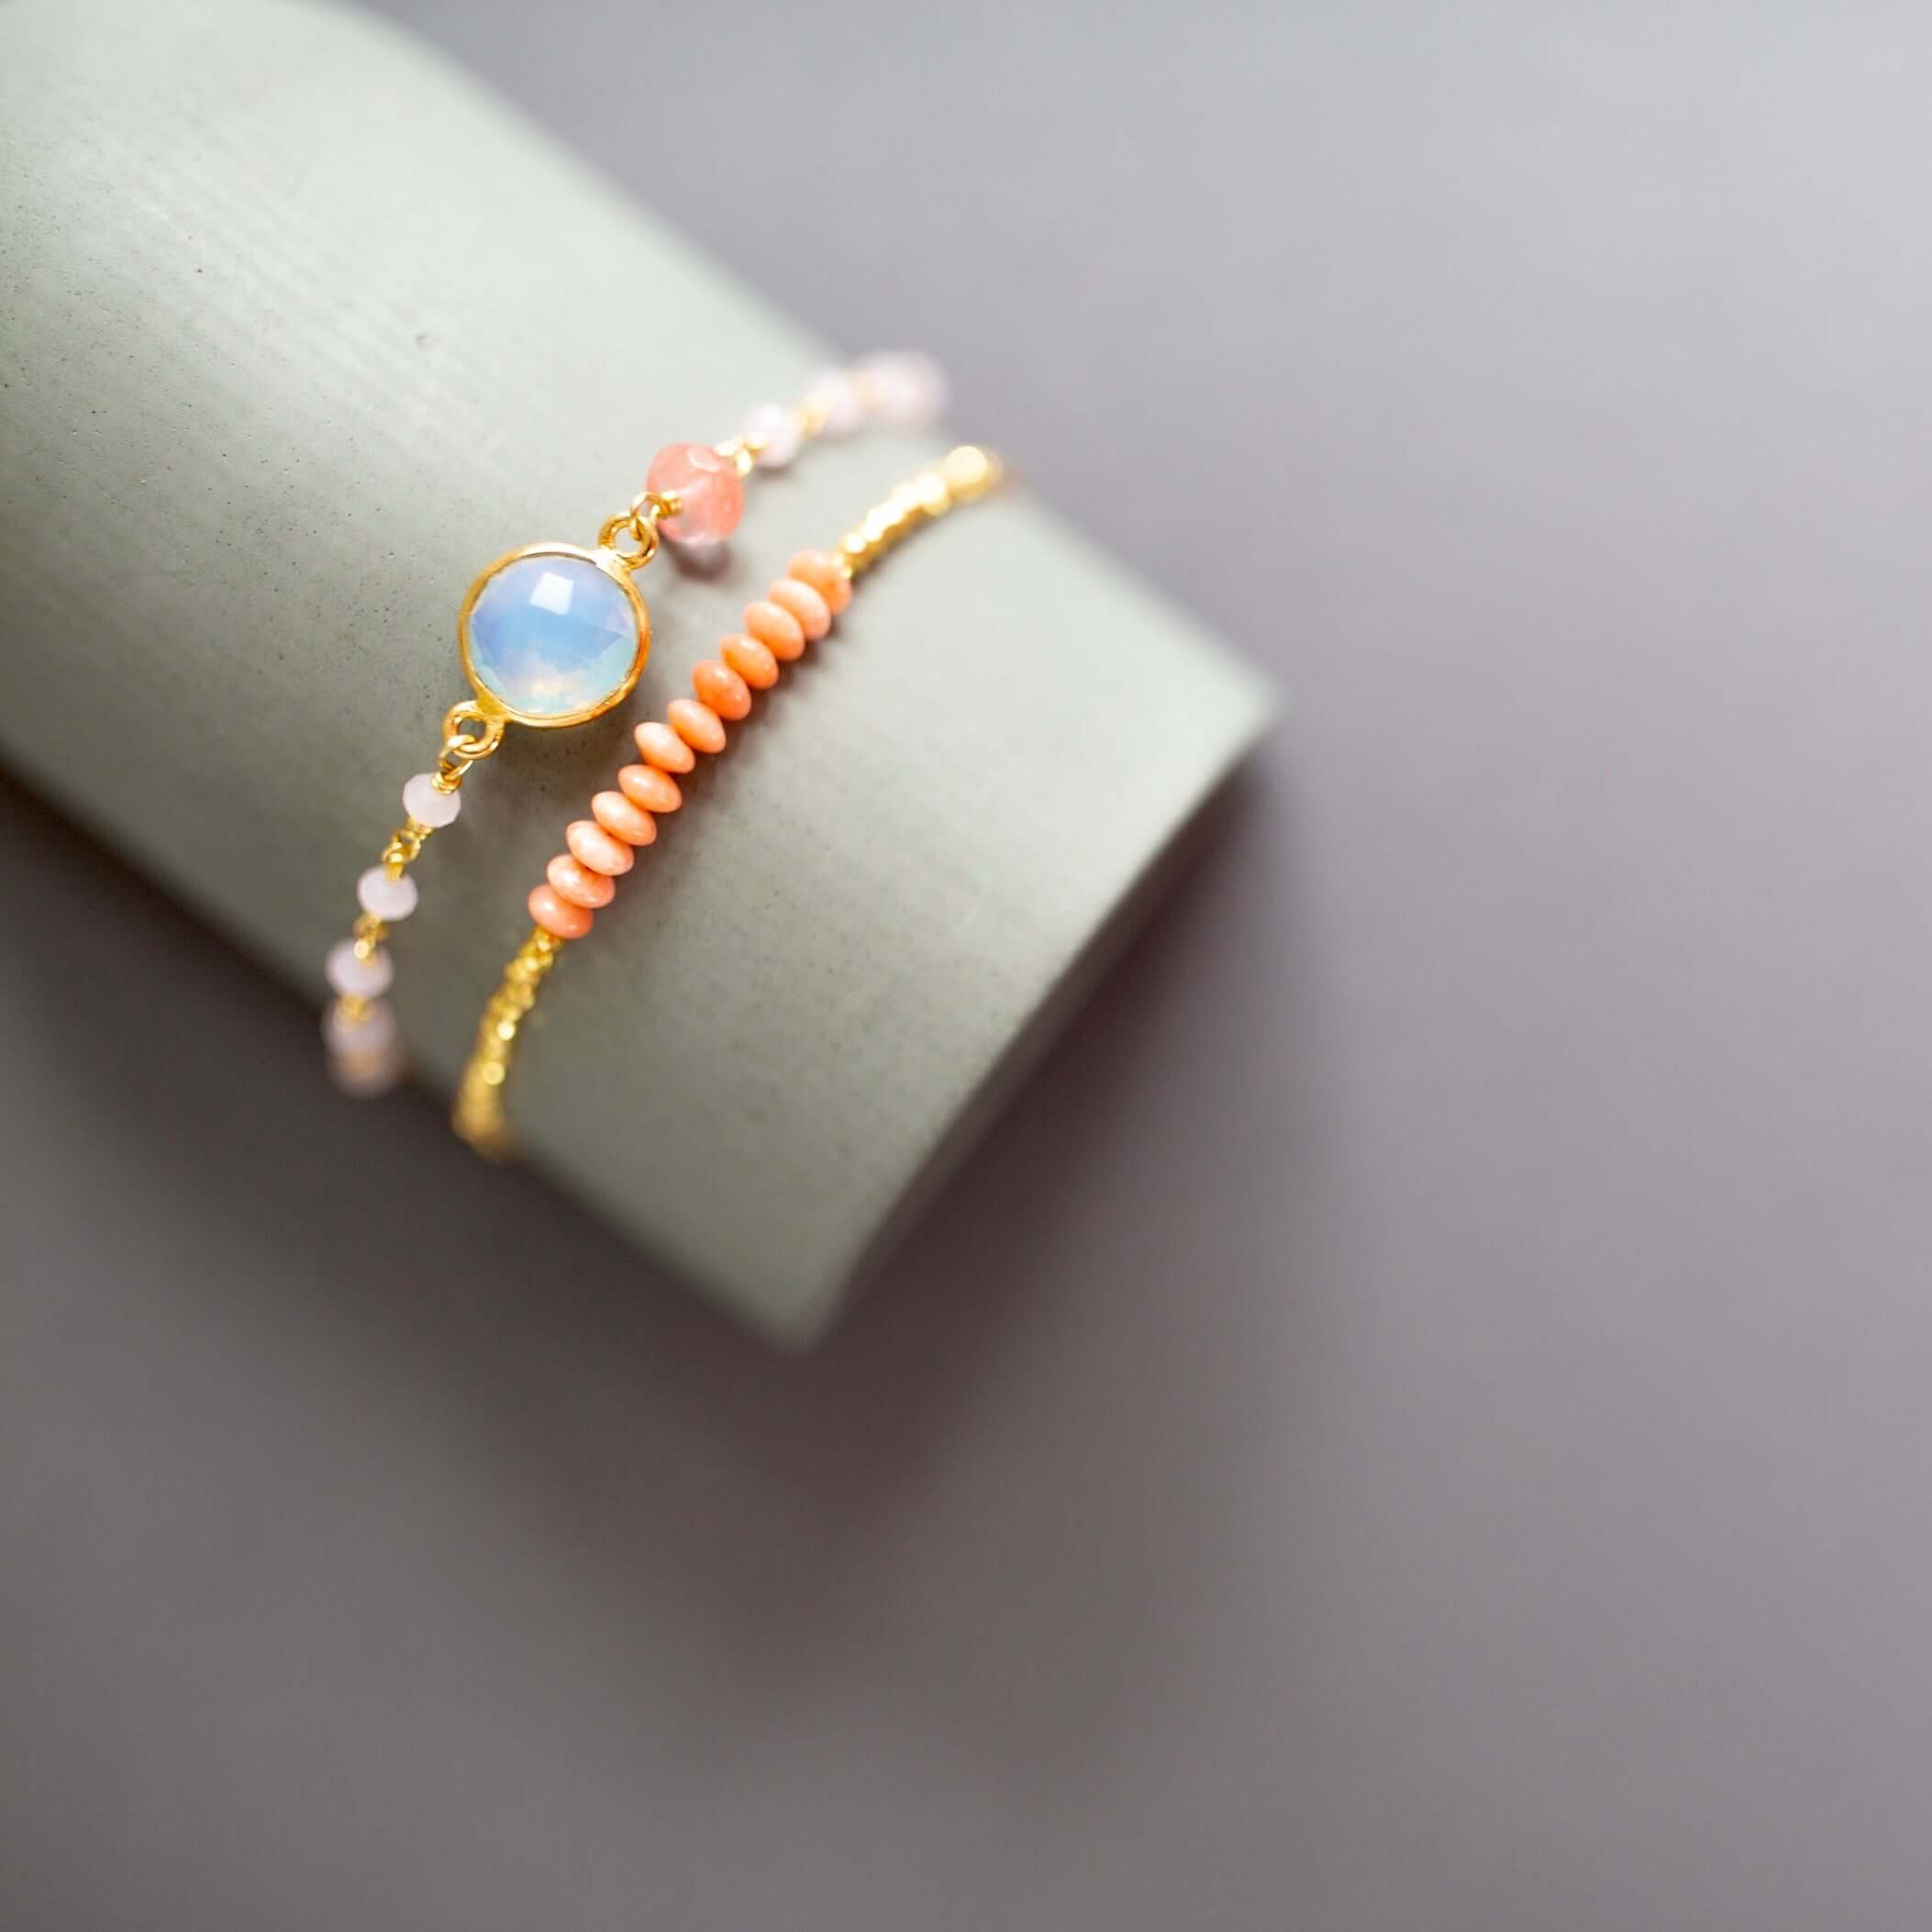 Adjustable Slider Bracelet Set with Authentic Pink Coral stones 